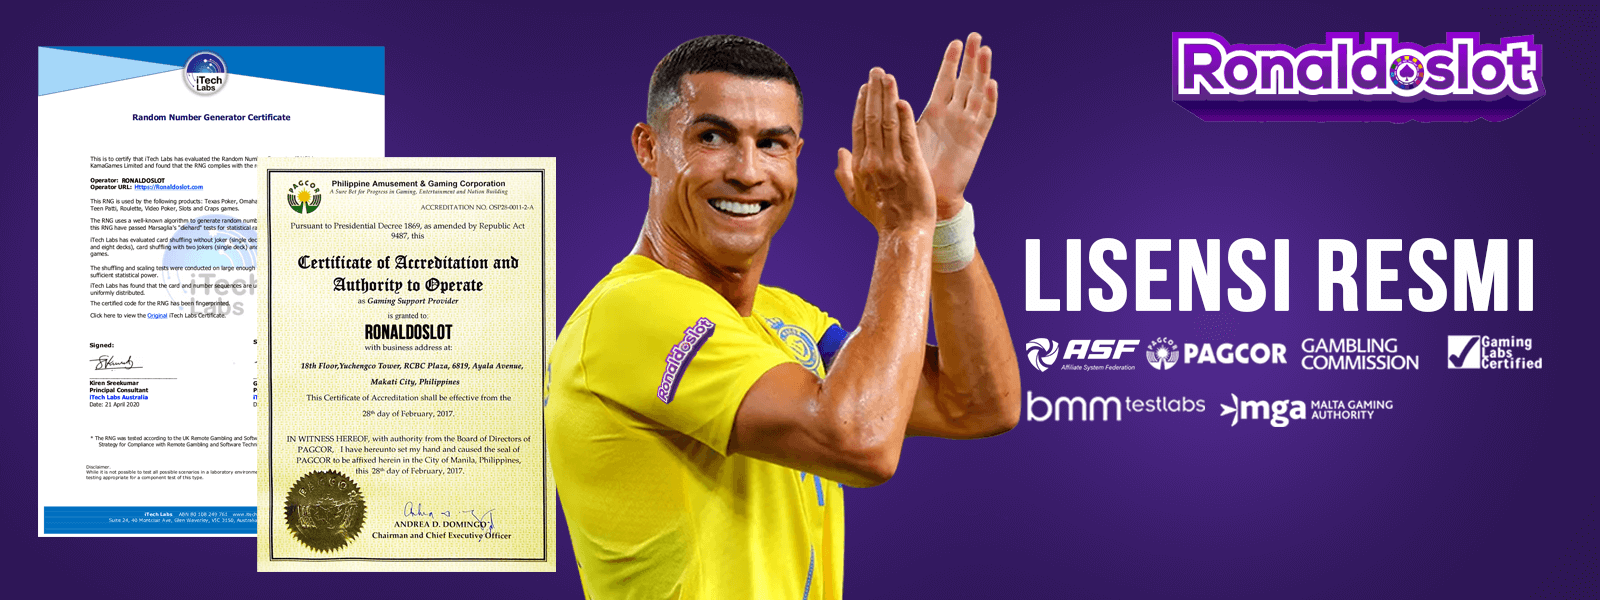 Ronaldo lisensi resmi